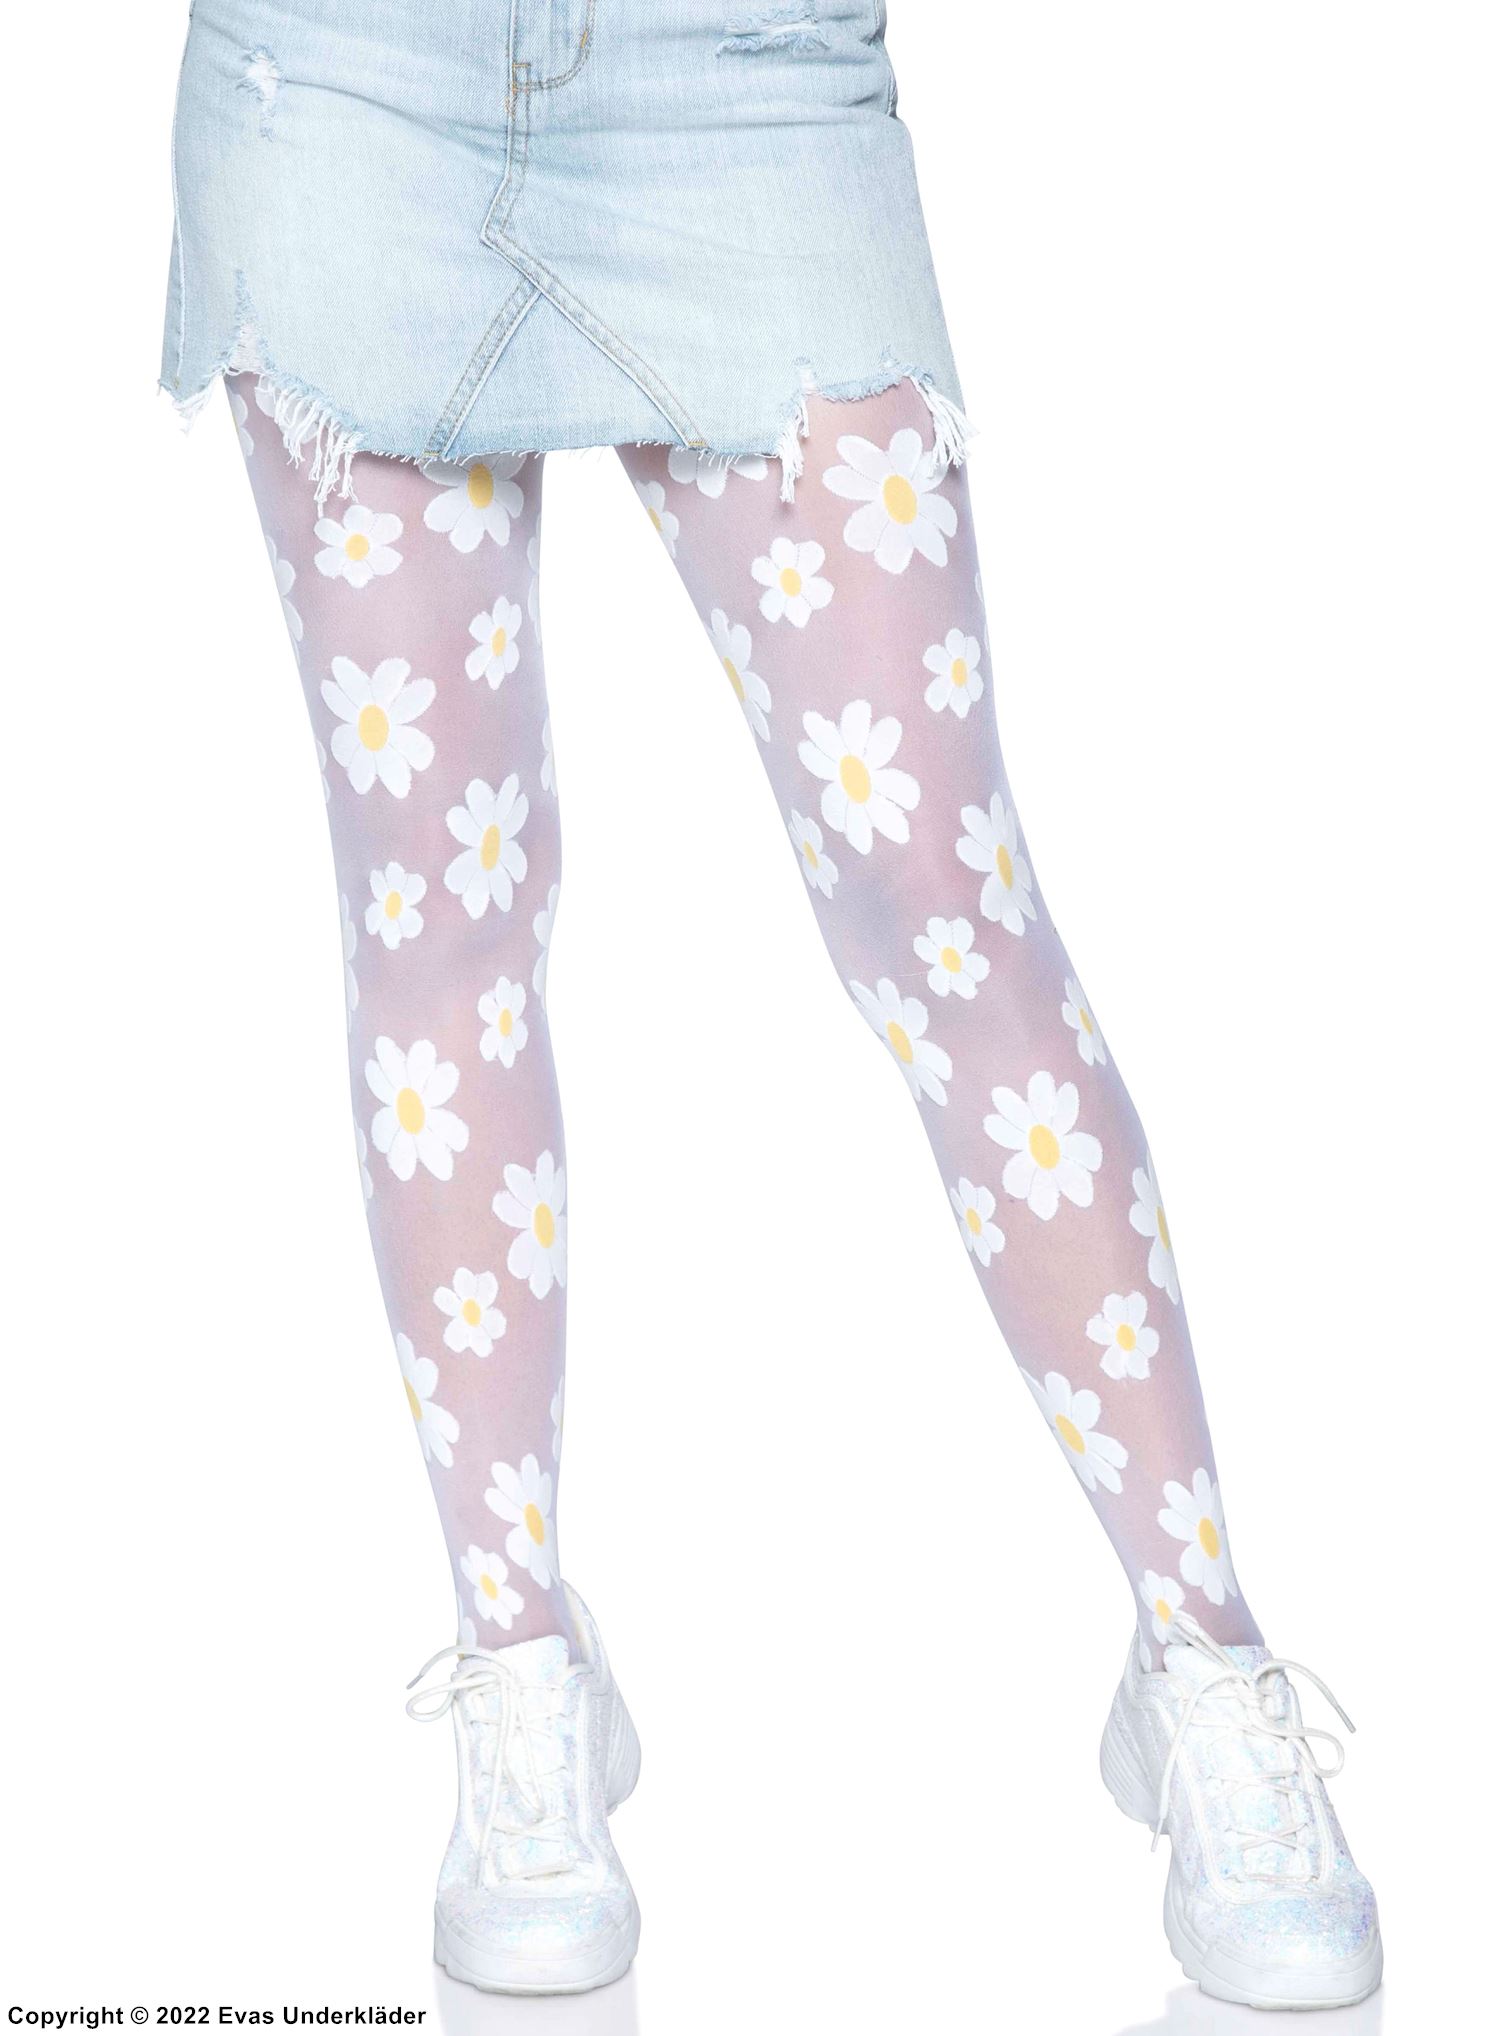 Cute pantyhose, sheer nylon, daisy flower